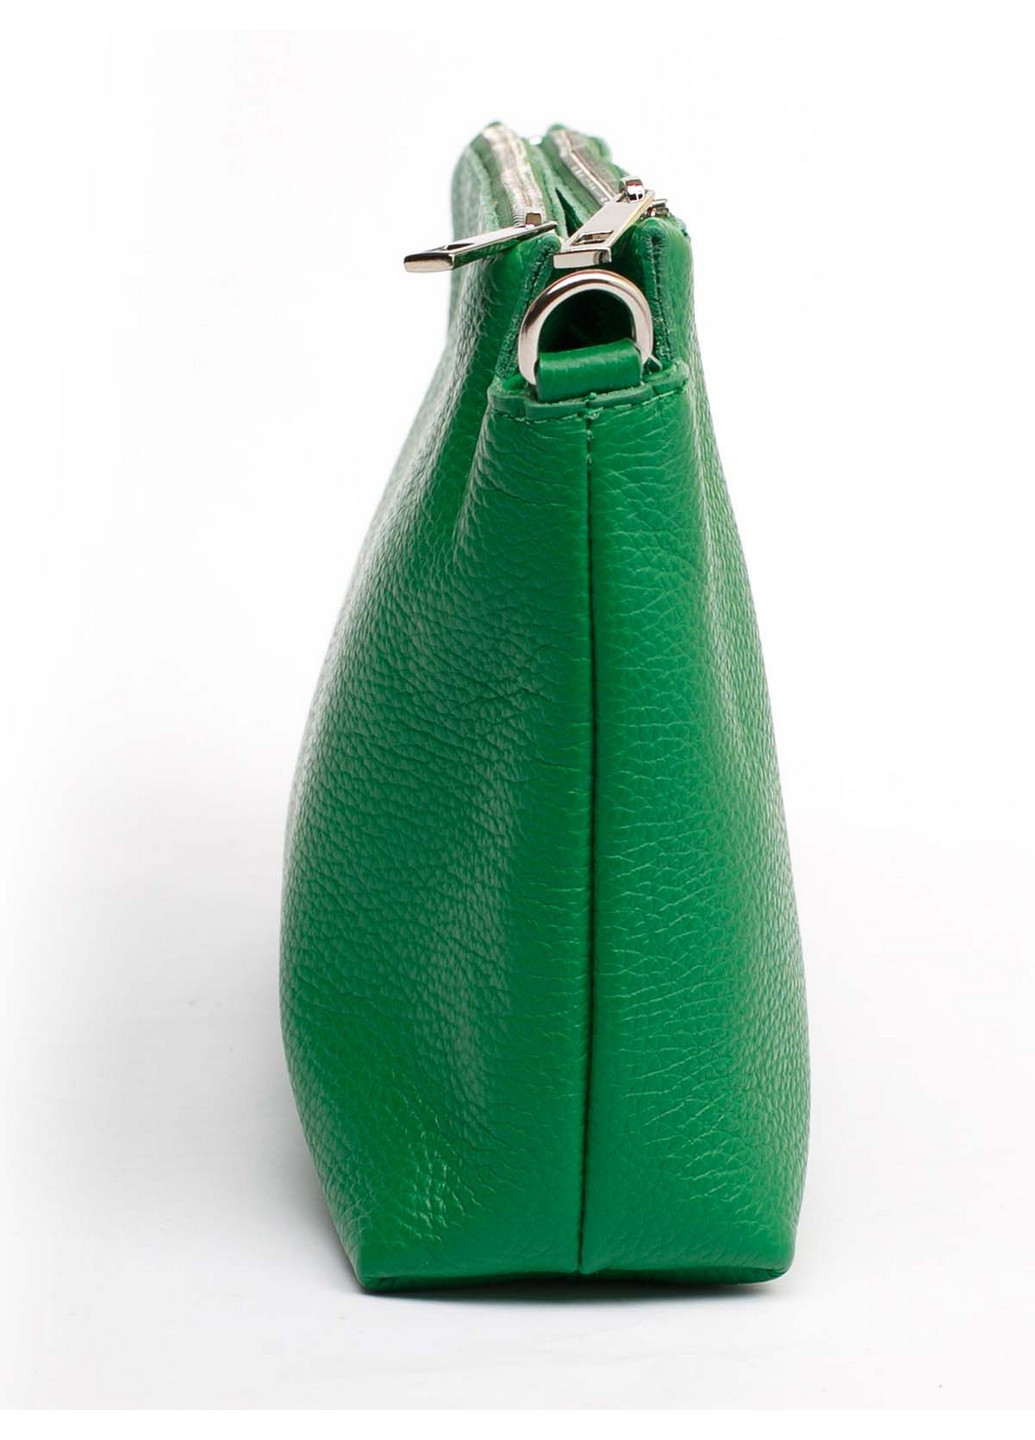 Сумка Italian Bags зелёная деловая